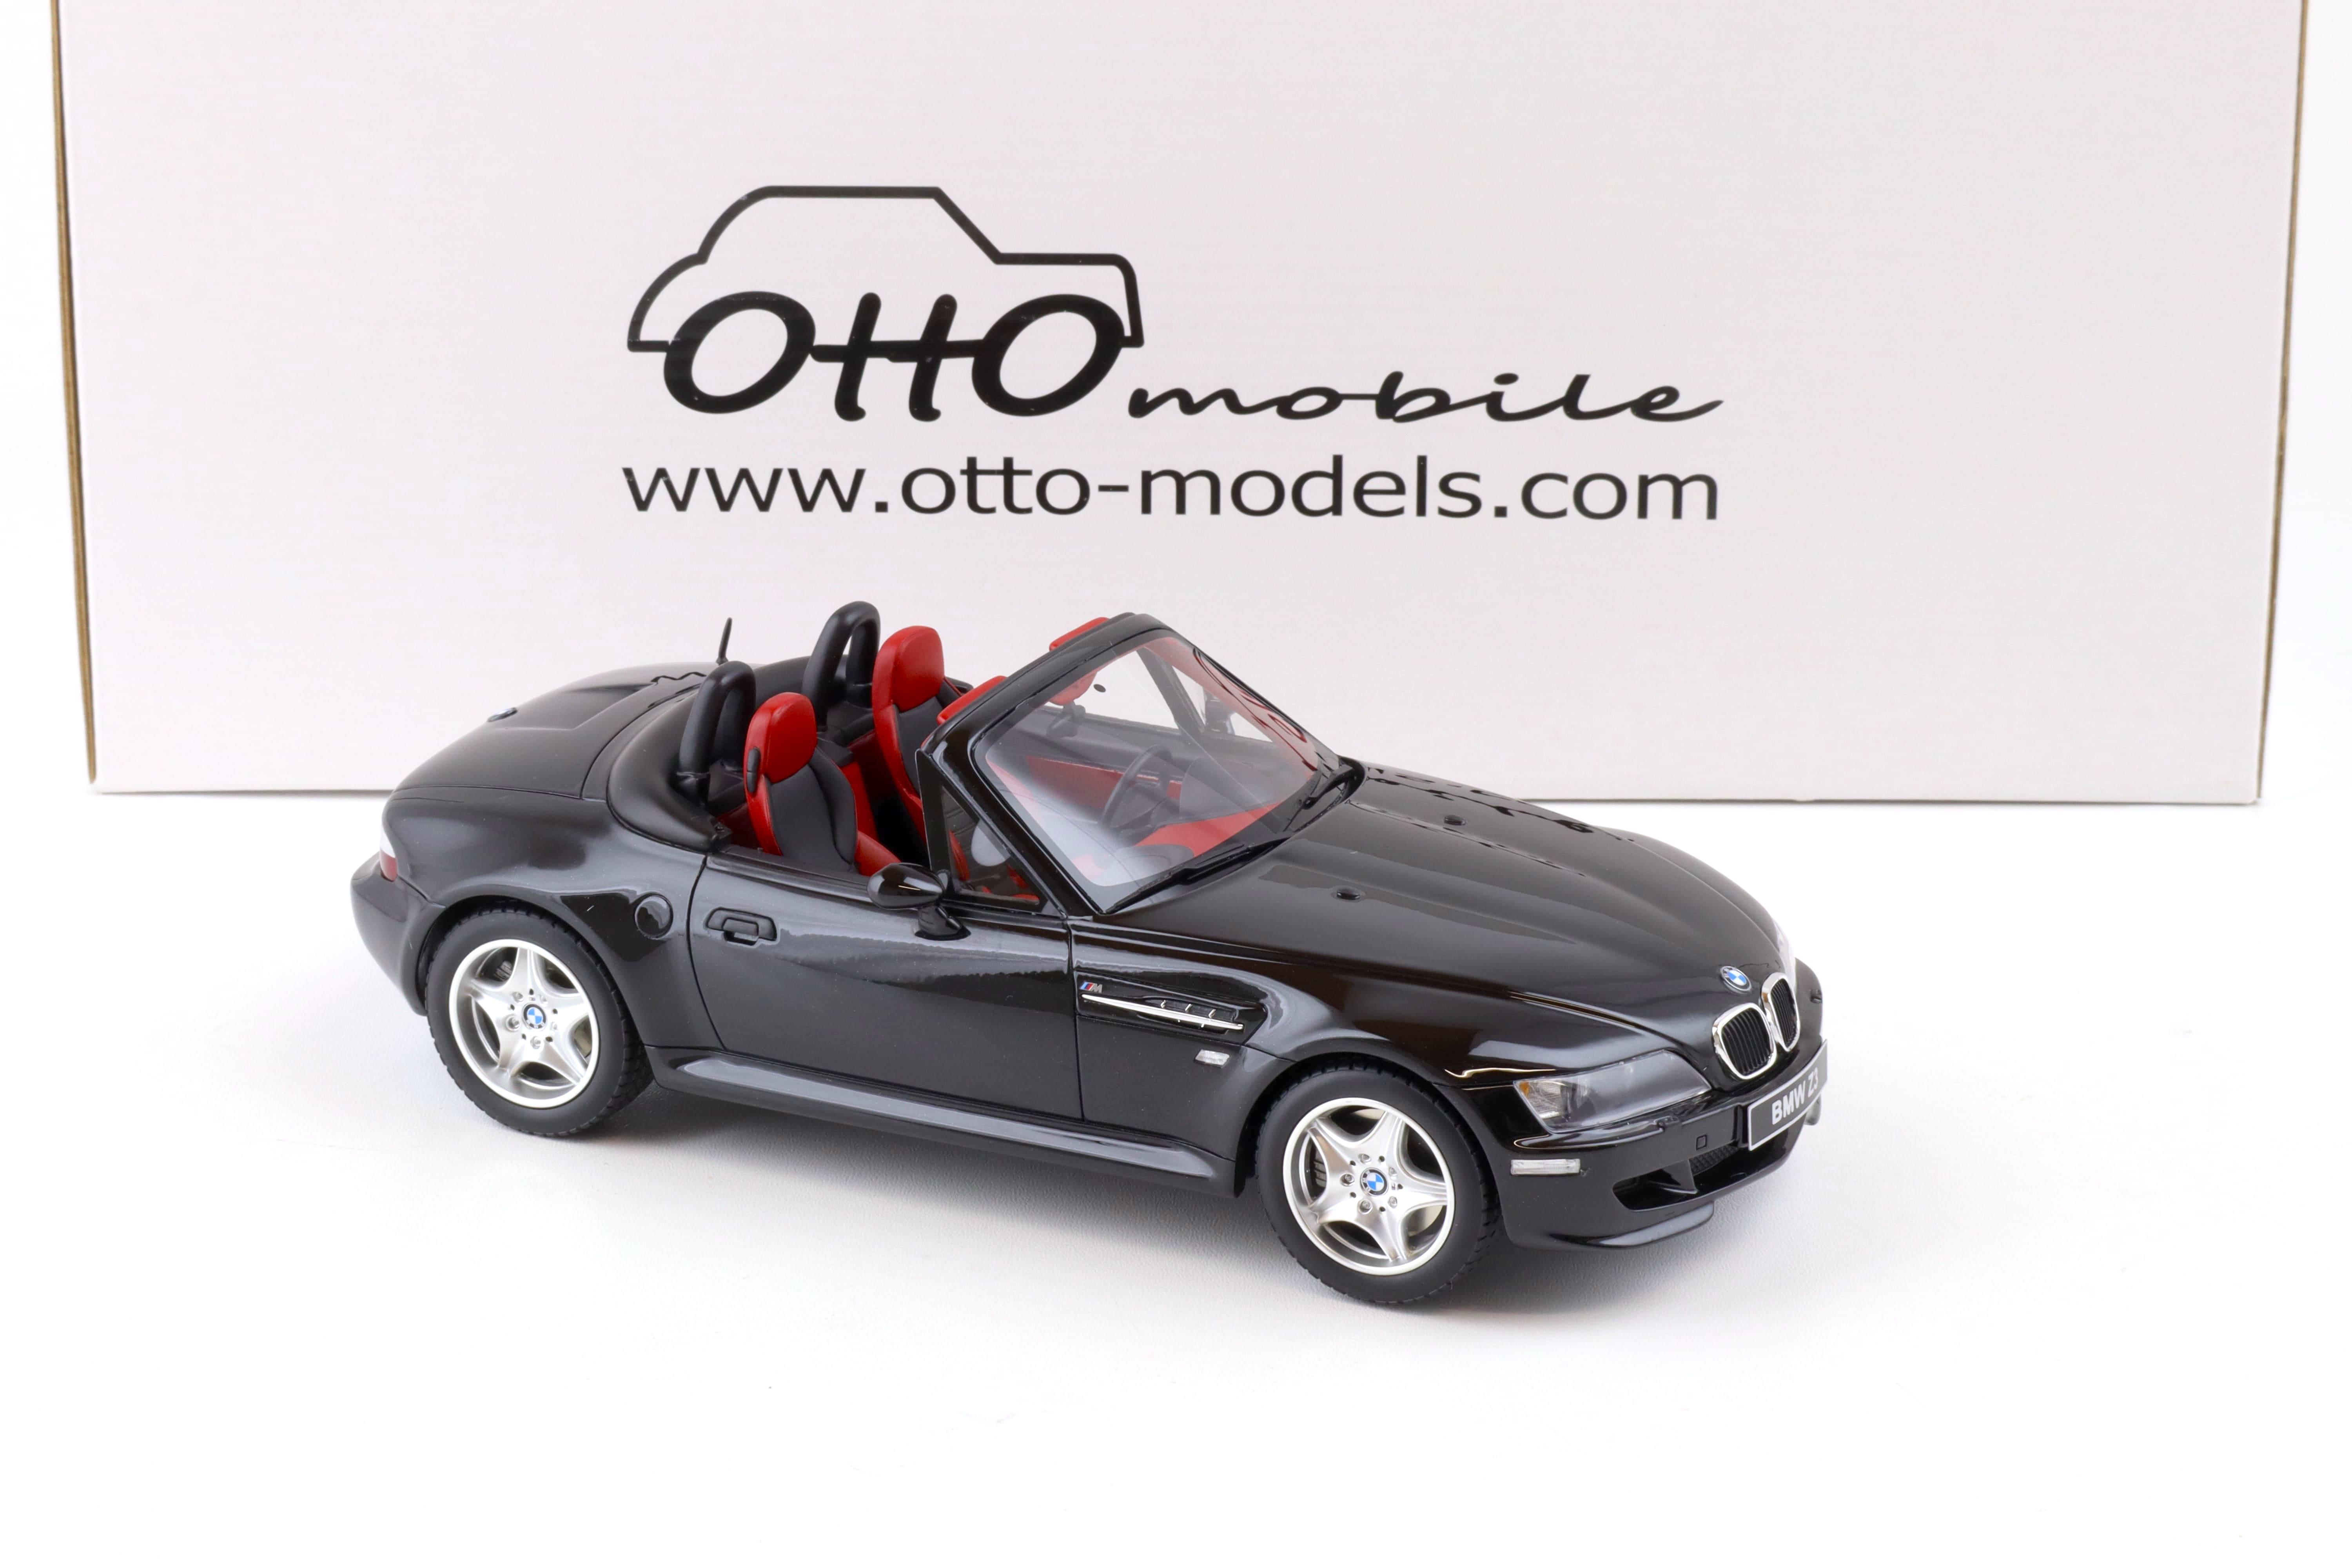 1:18 OTTO mobile OT1016 BMW Z3 M Roadster black/ red 1999